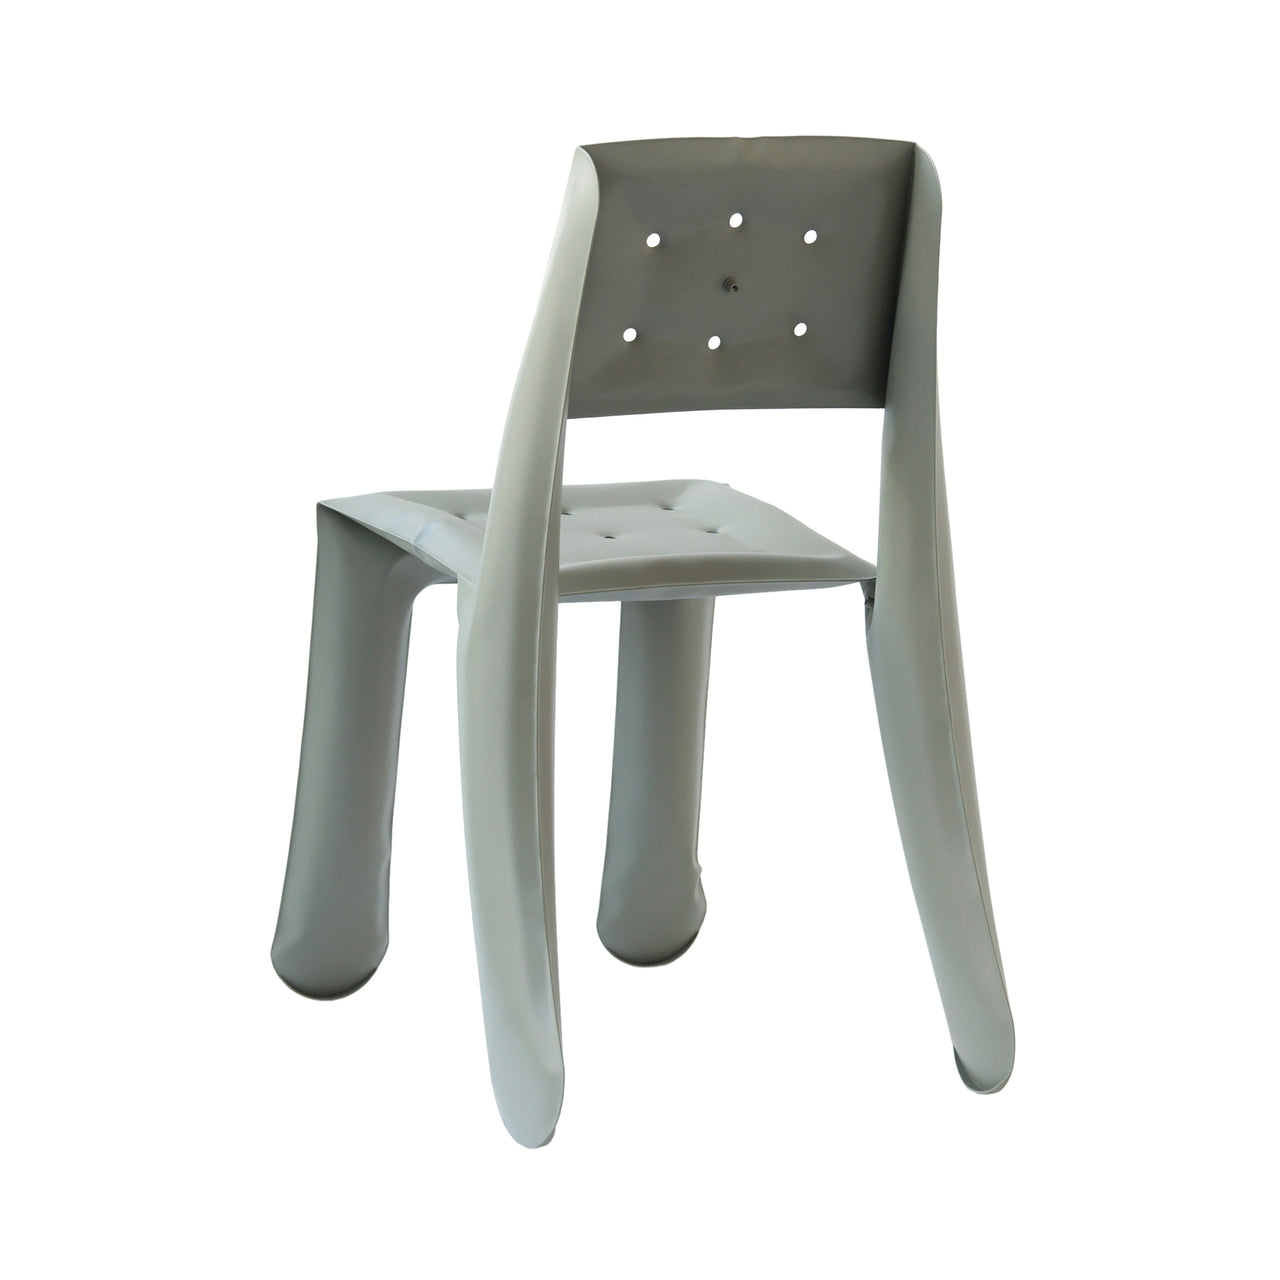 Chippensteel 0.5 Chair: Moss Grey Aluminum